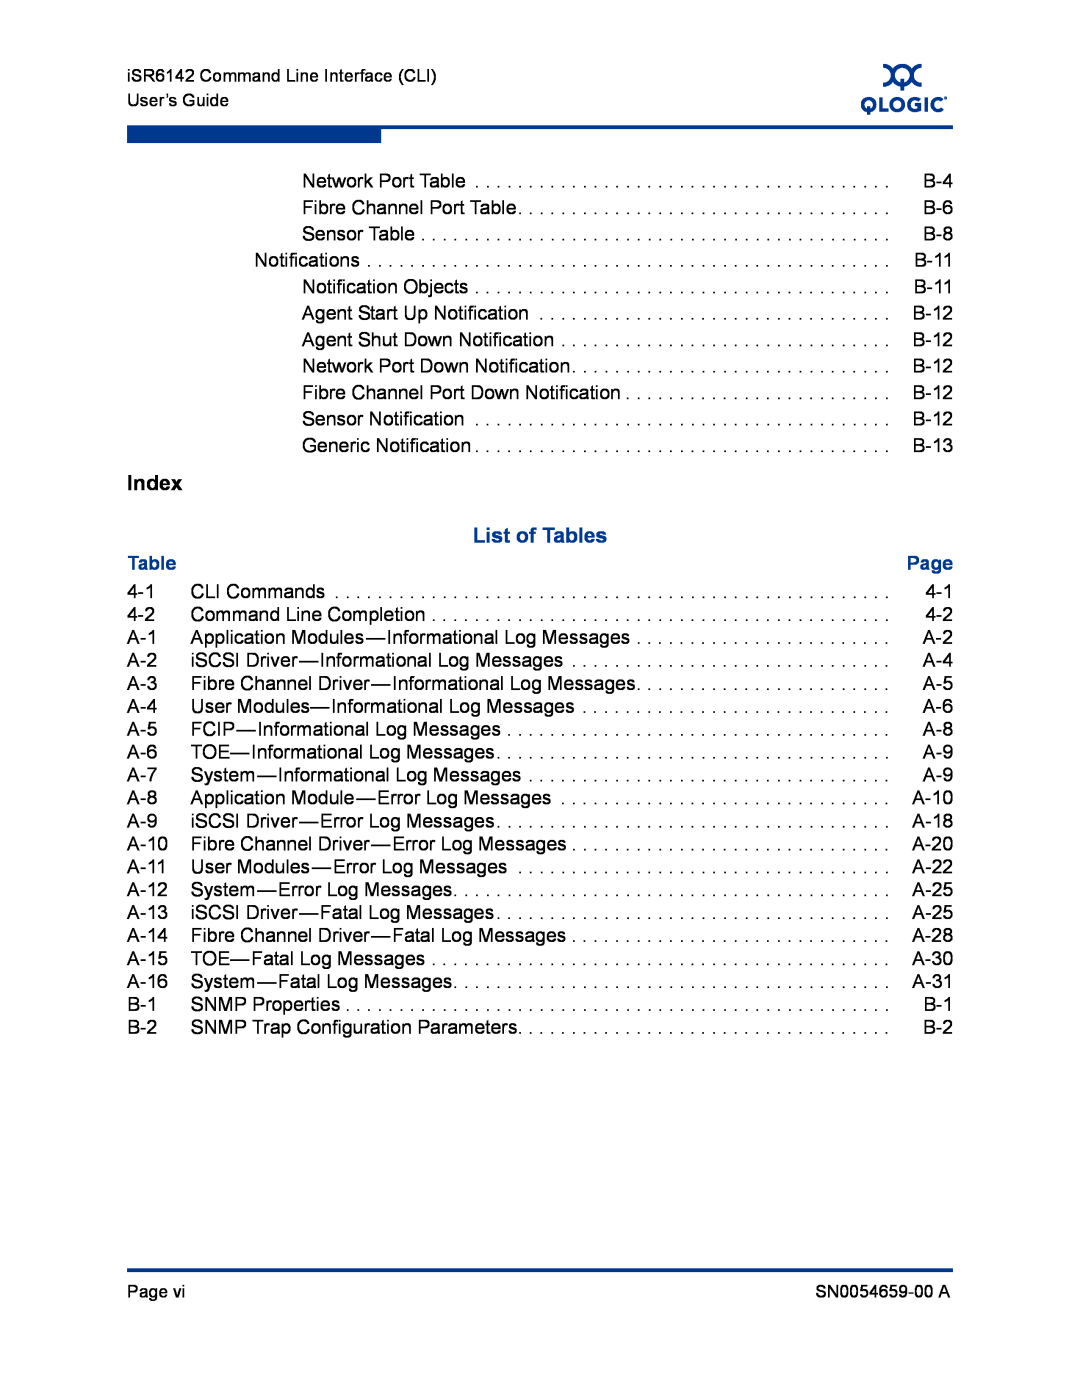 Q-Logic ISR6142 manual Index, List of Tables 